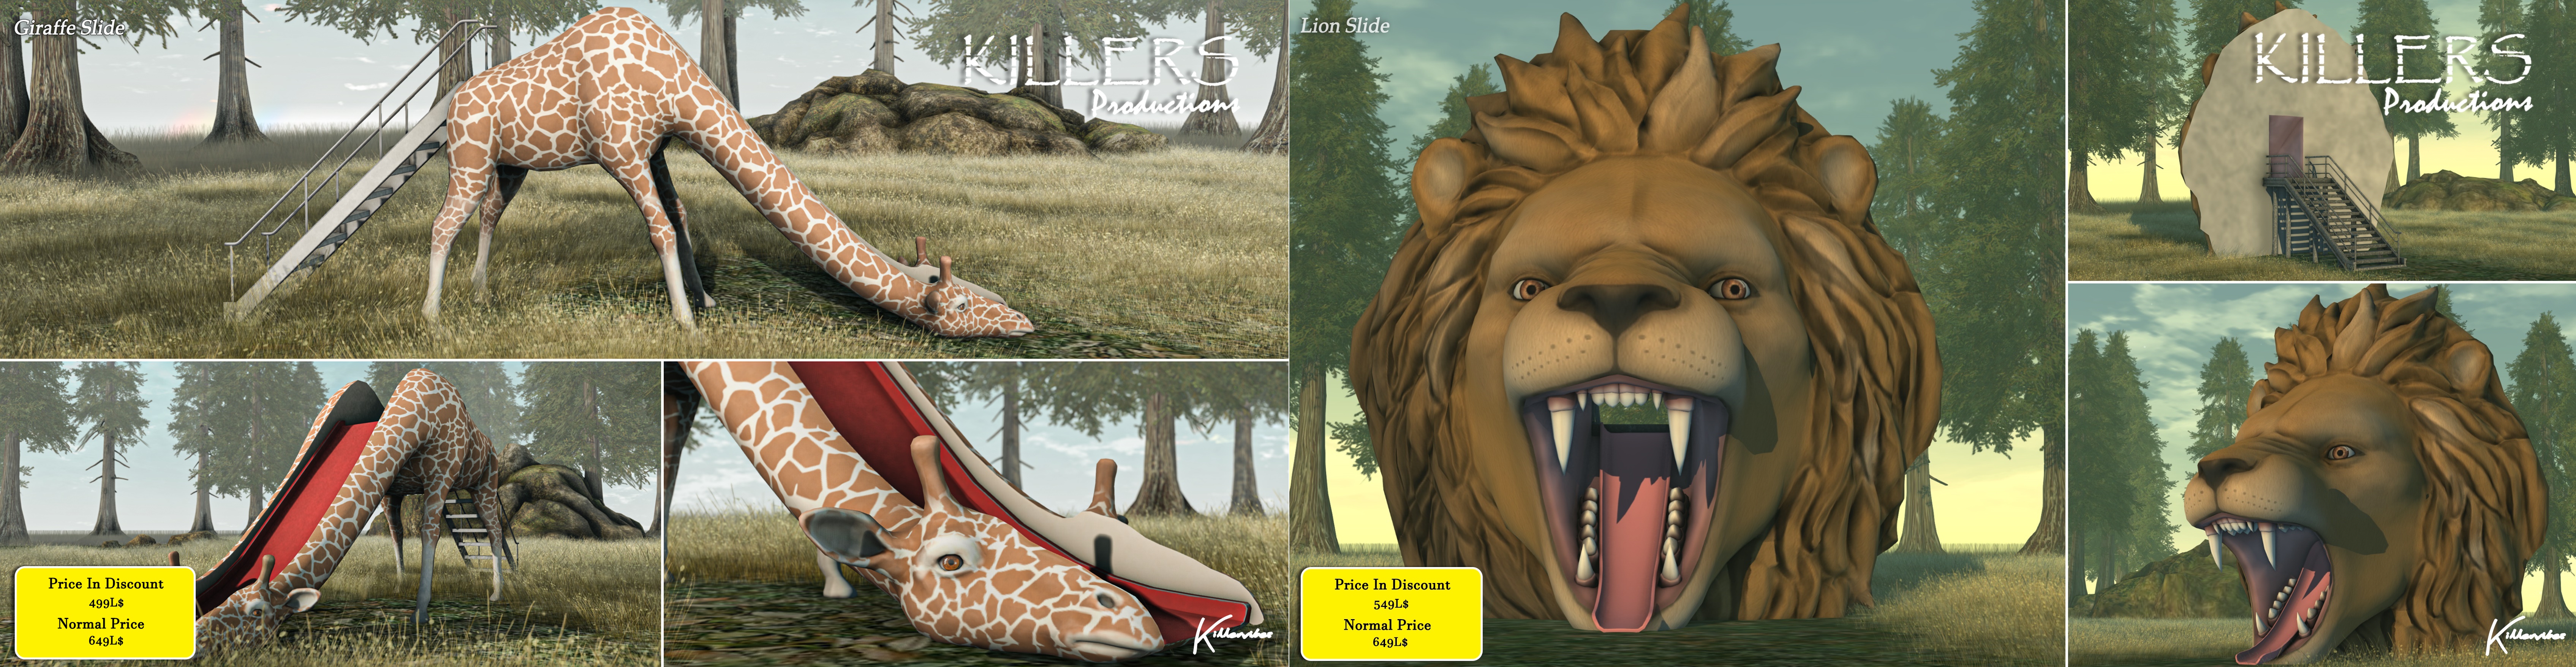 Killers Productions – Giraffe & Lion Slides